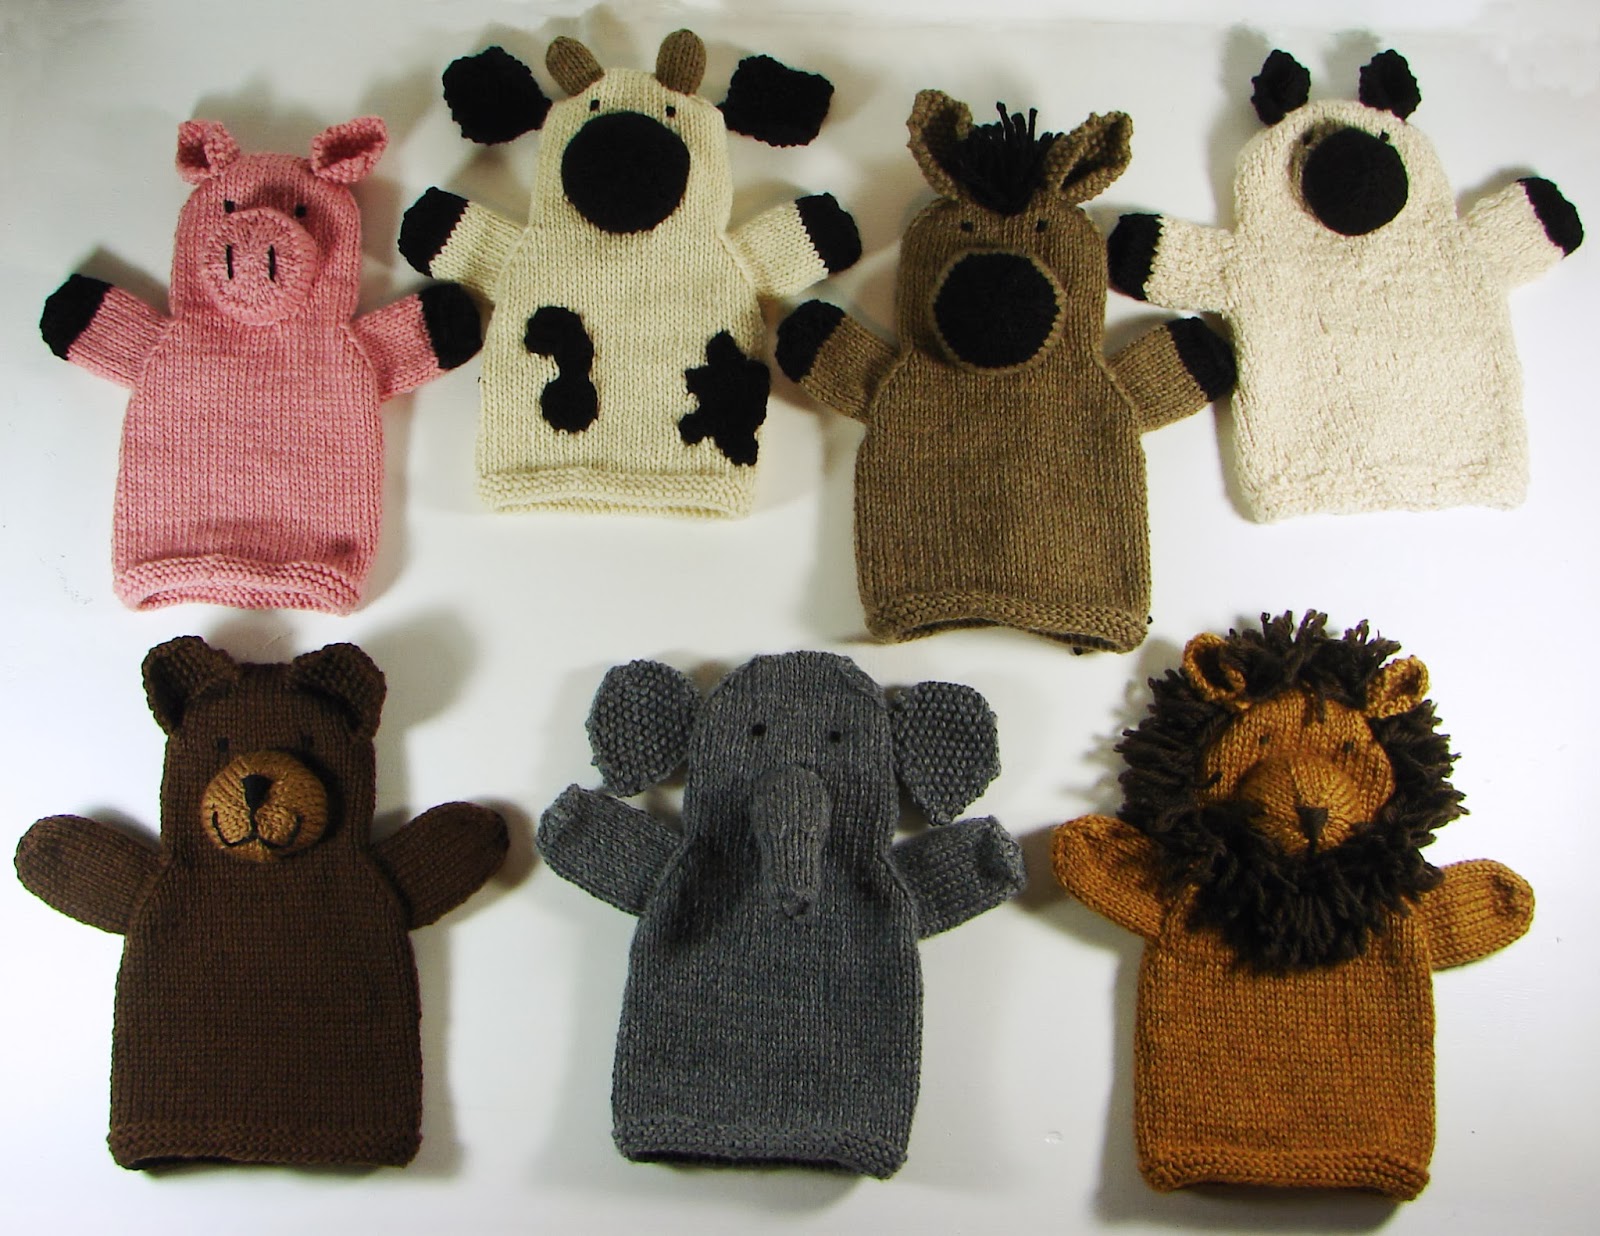 Auntie Em's Studio: A herd of animal puppets